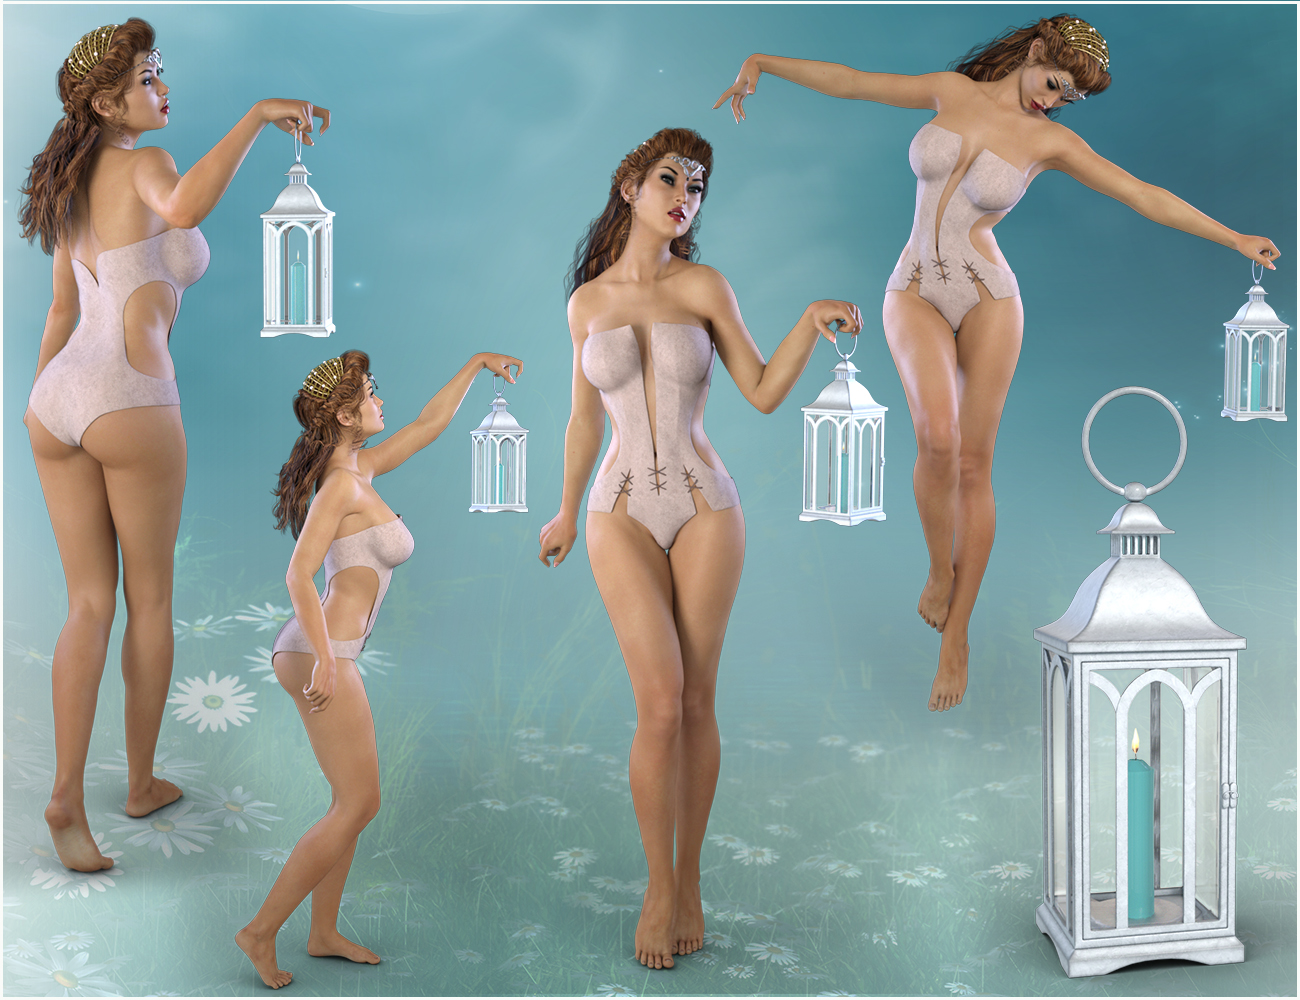 Z Whimsical - Props & Poses by: Zeddicuss, 3D Models by Daz 3D